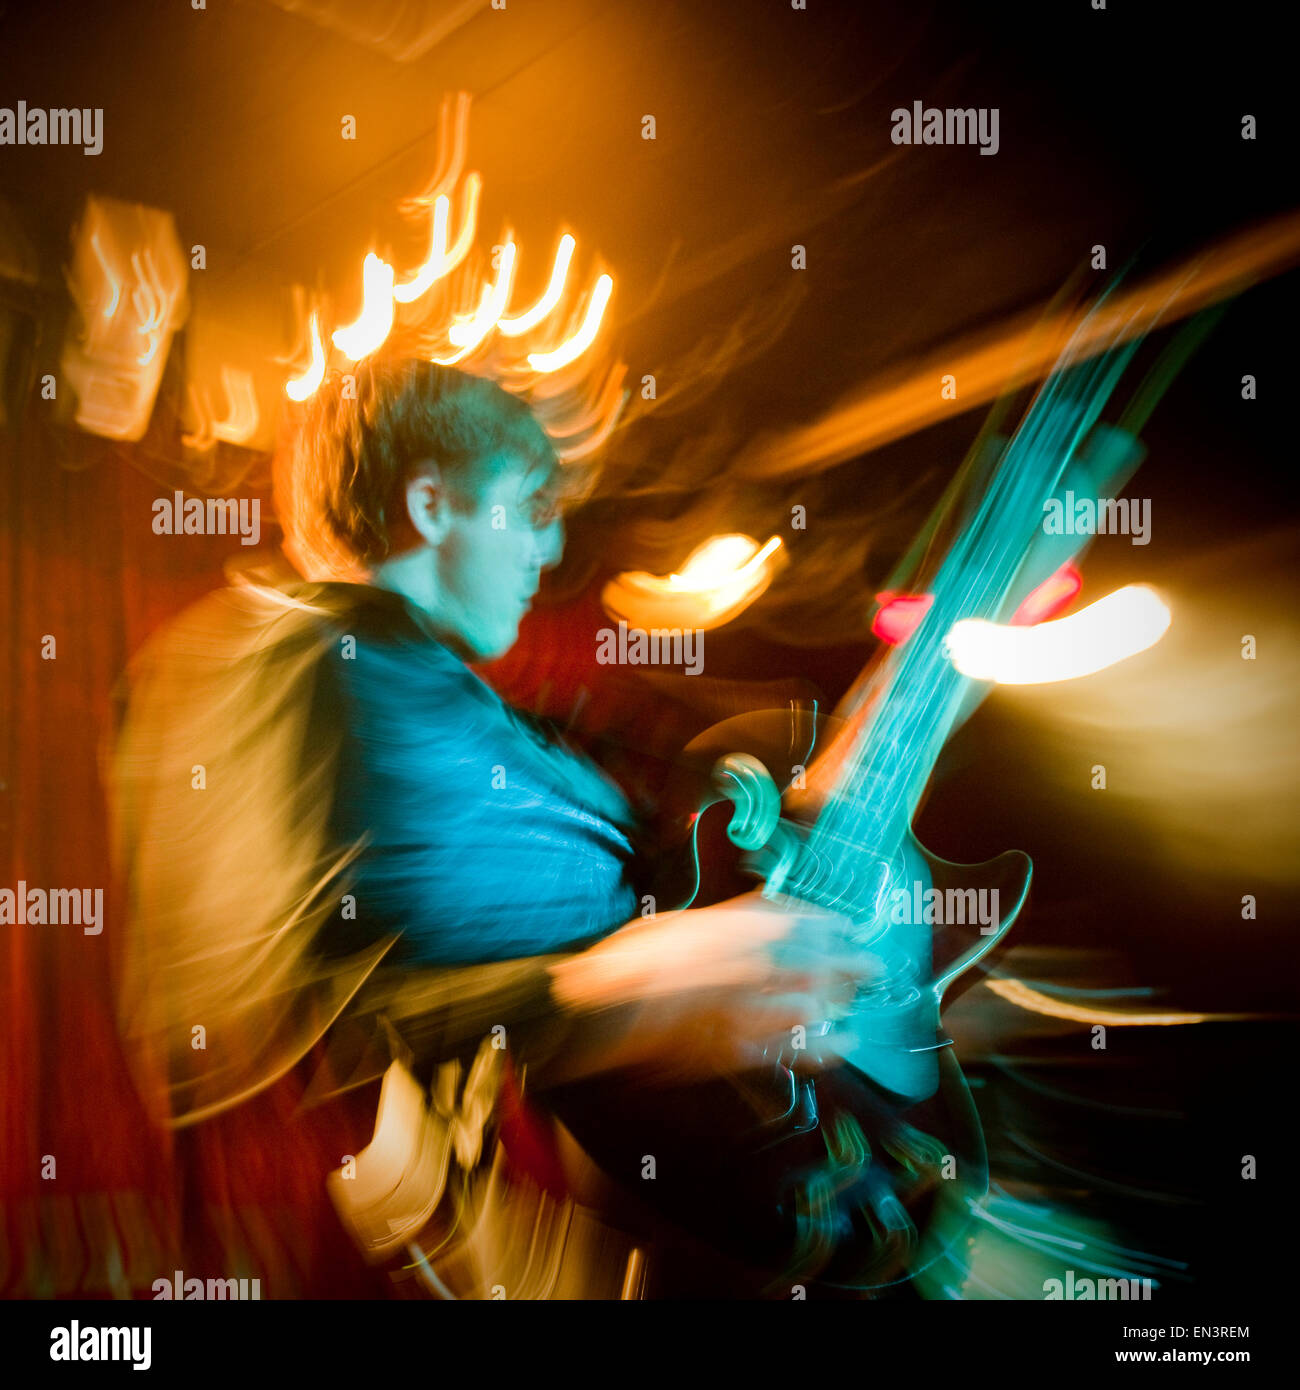 USA,Utah,Provo,Guitar player performing on stage Stock Photo